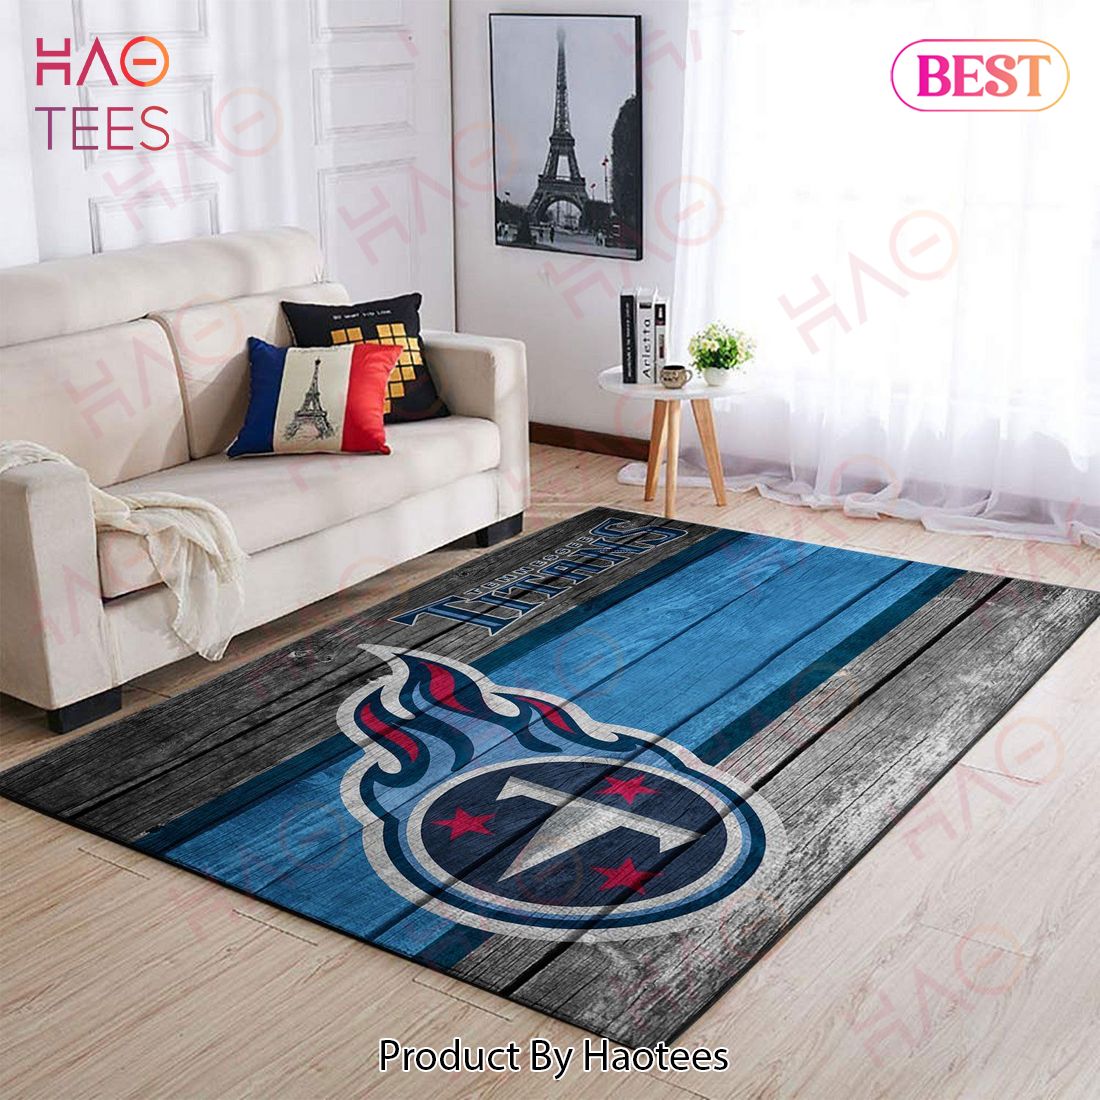 Tennessee Titans Nfl Team Logo Area Rugs Wooden Style Living Room Carpet Sports Rug Regtangle Carpet Floor Decor Home Decor